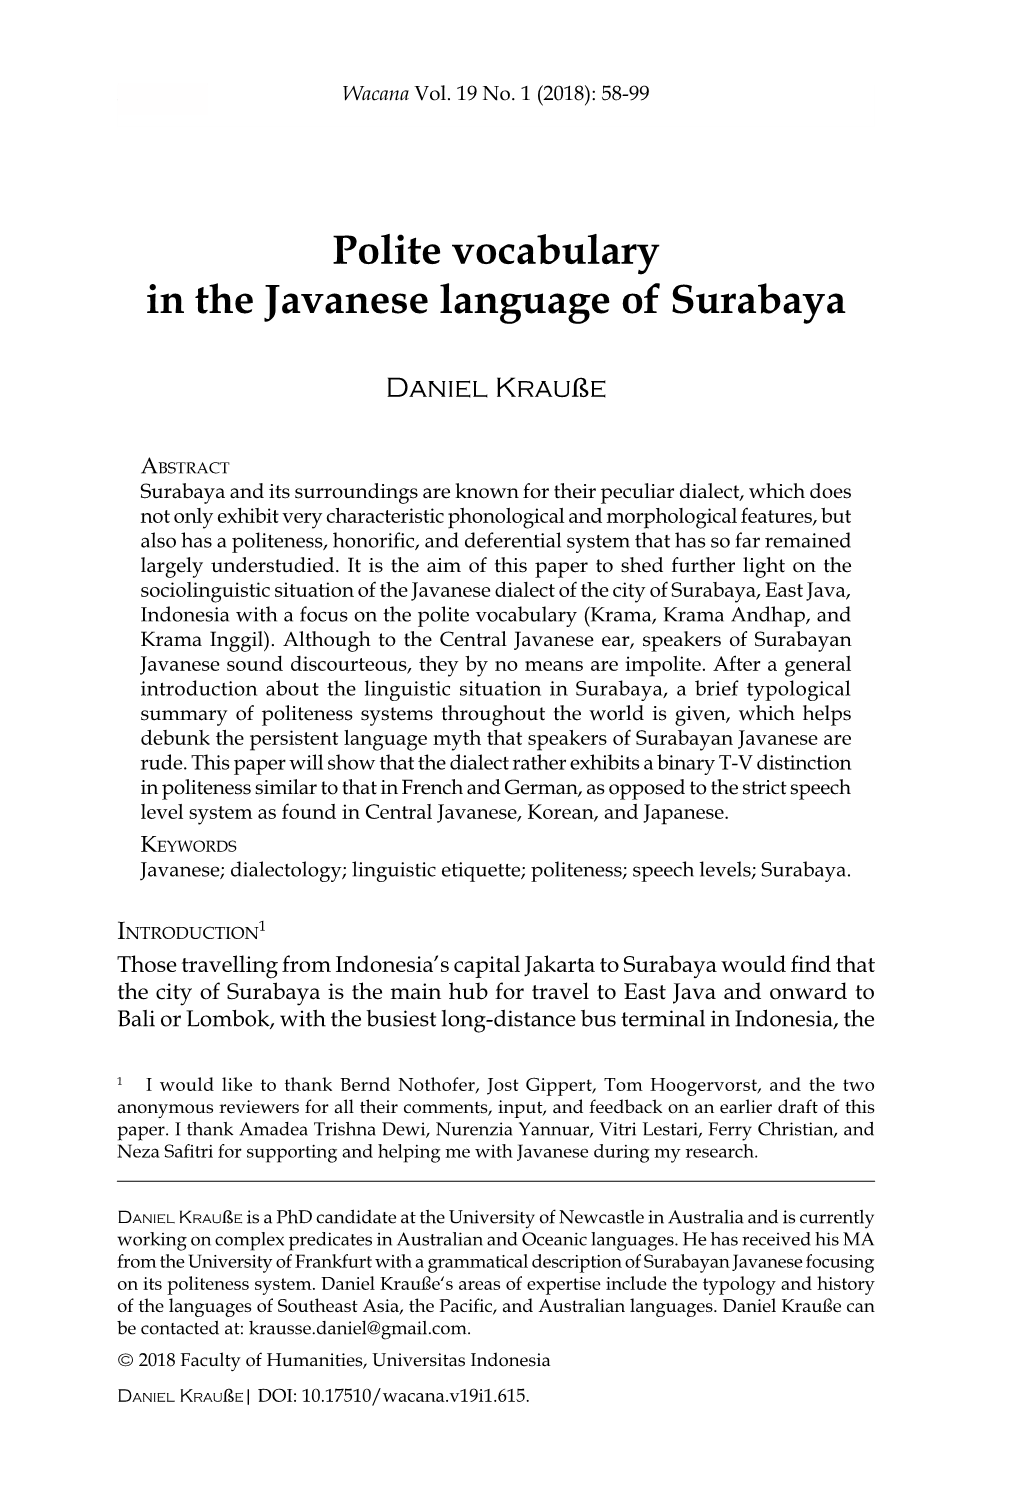 Polite Vocabulary in the Javanese Language of Surabaya